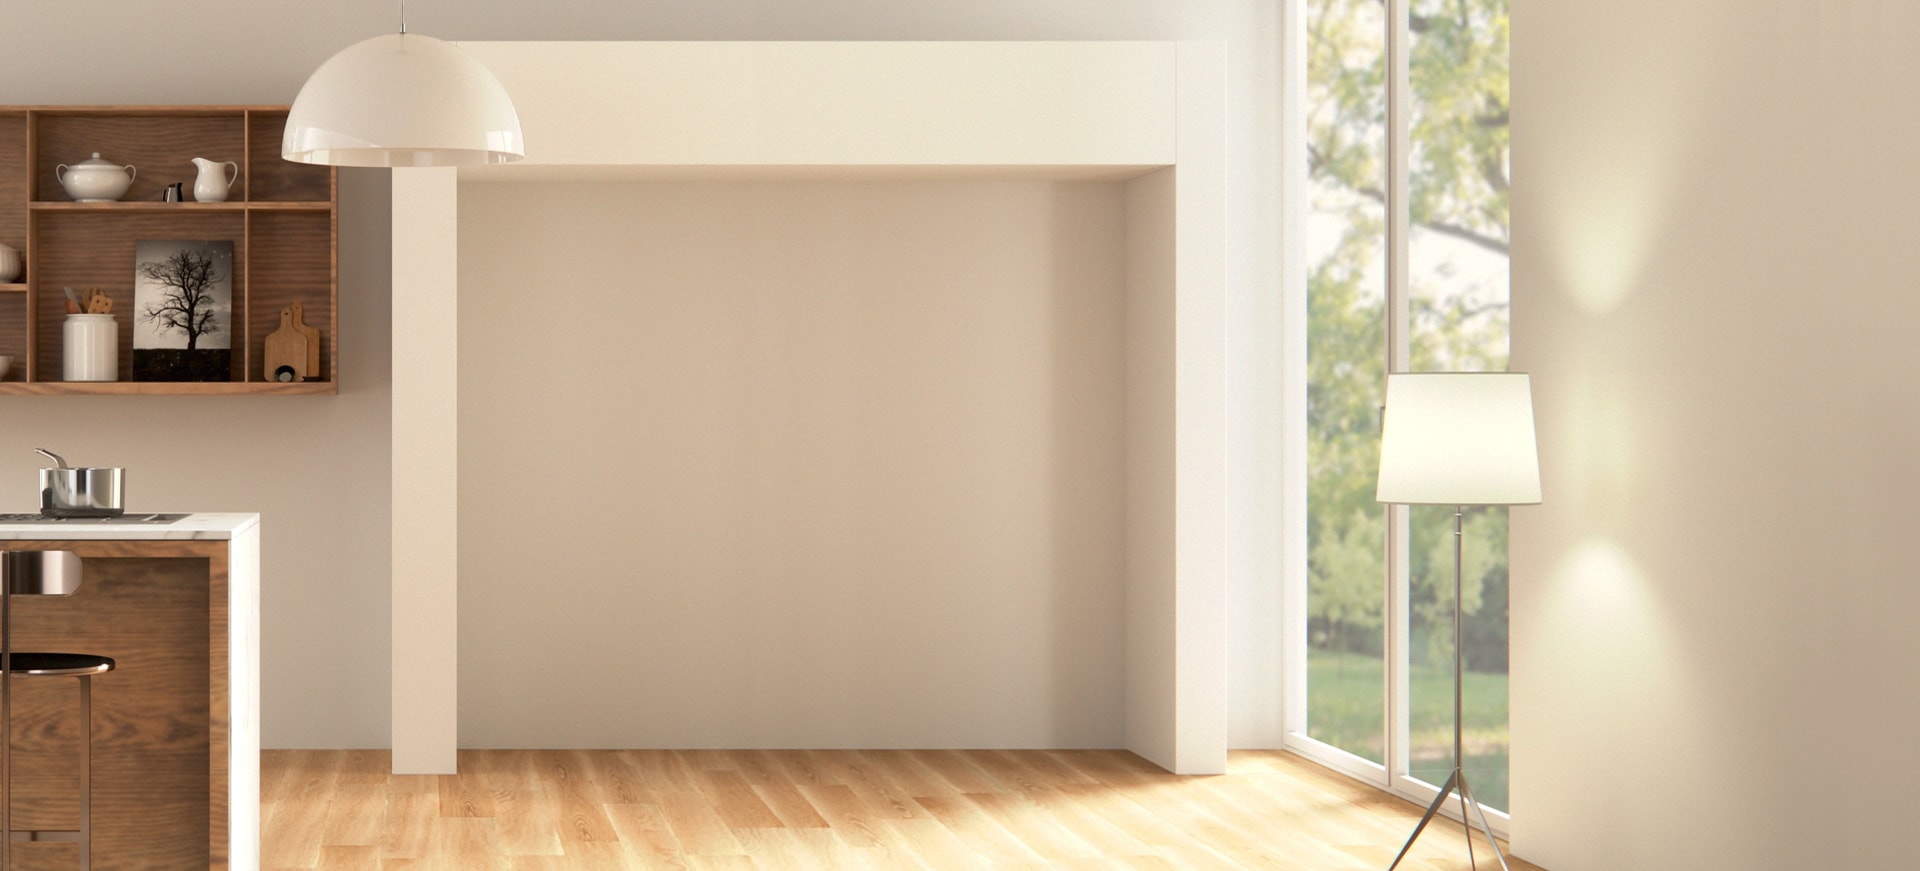 Samsung Bespoke Refrigerator White and wood style room